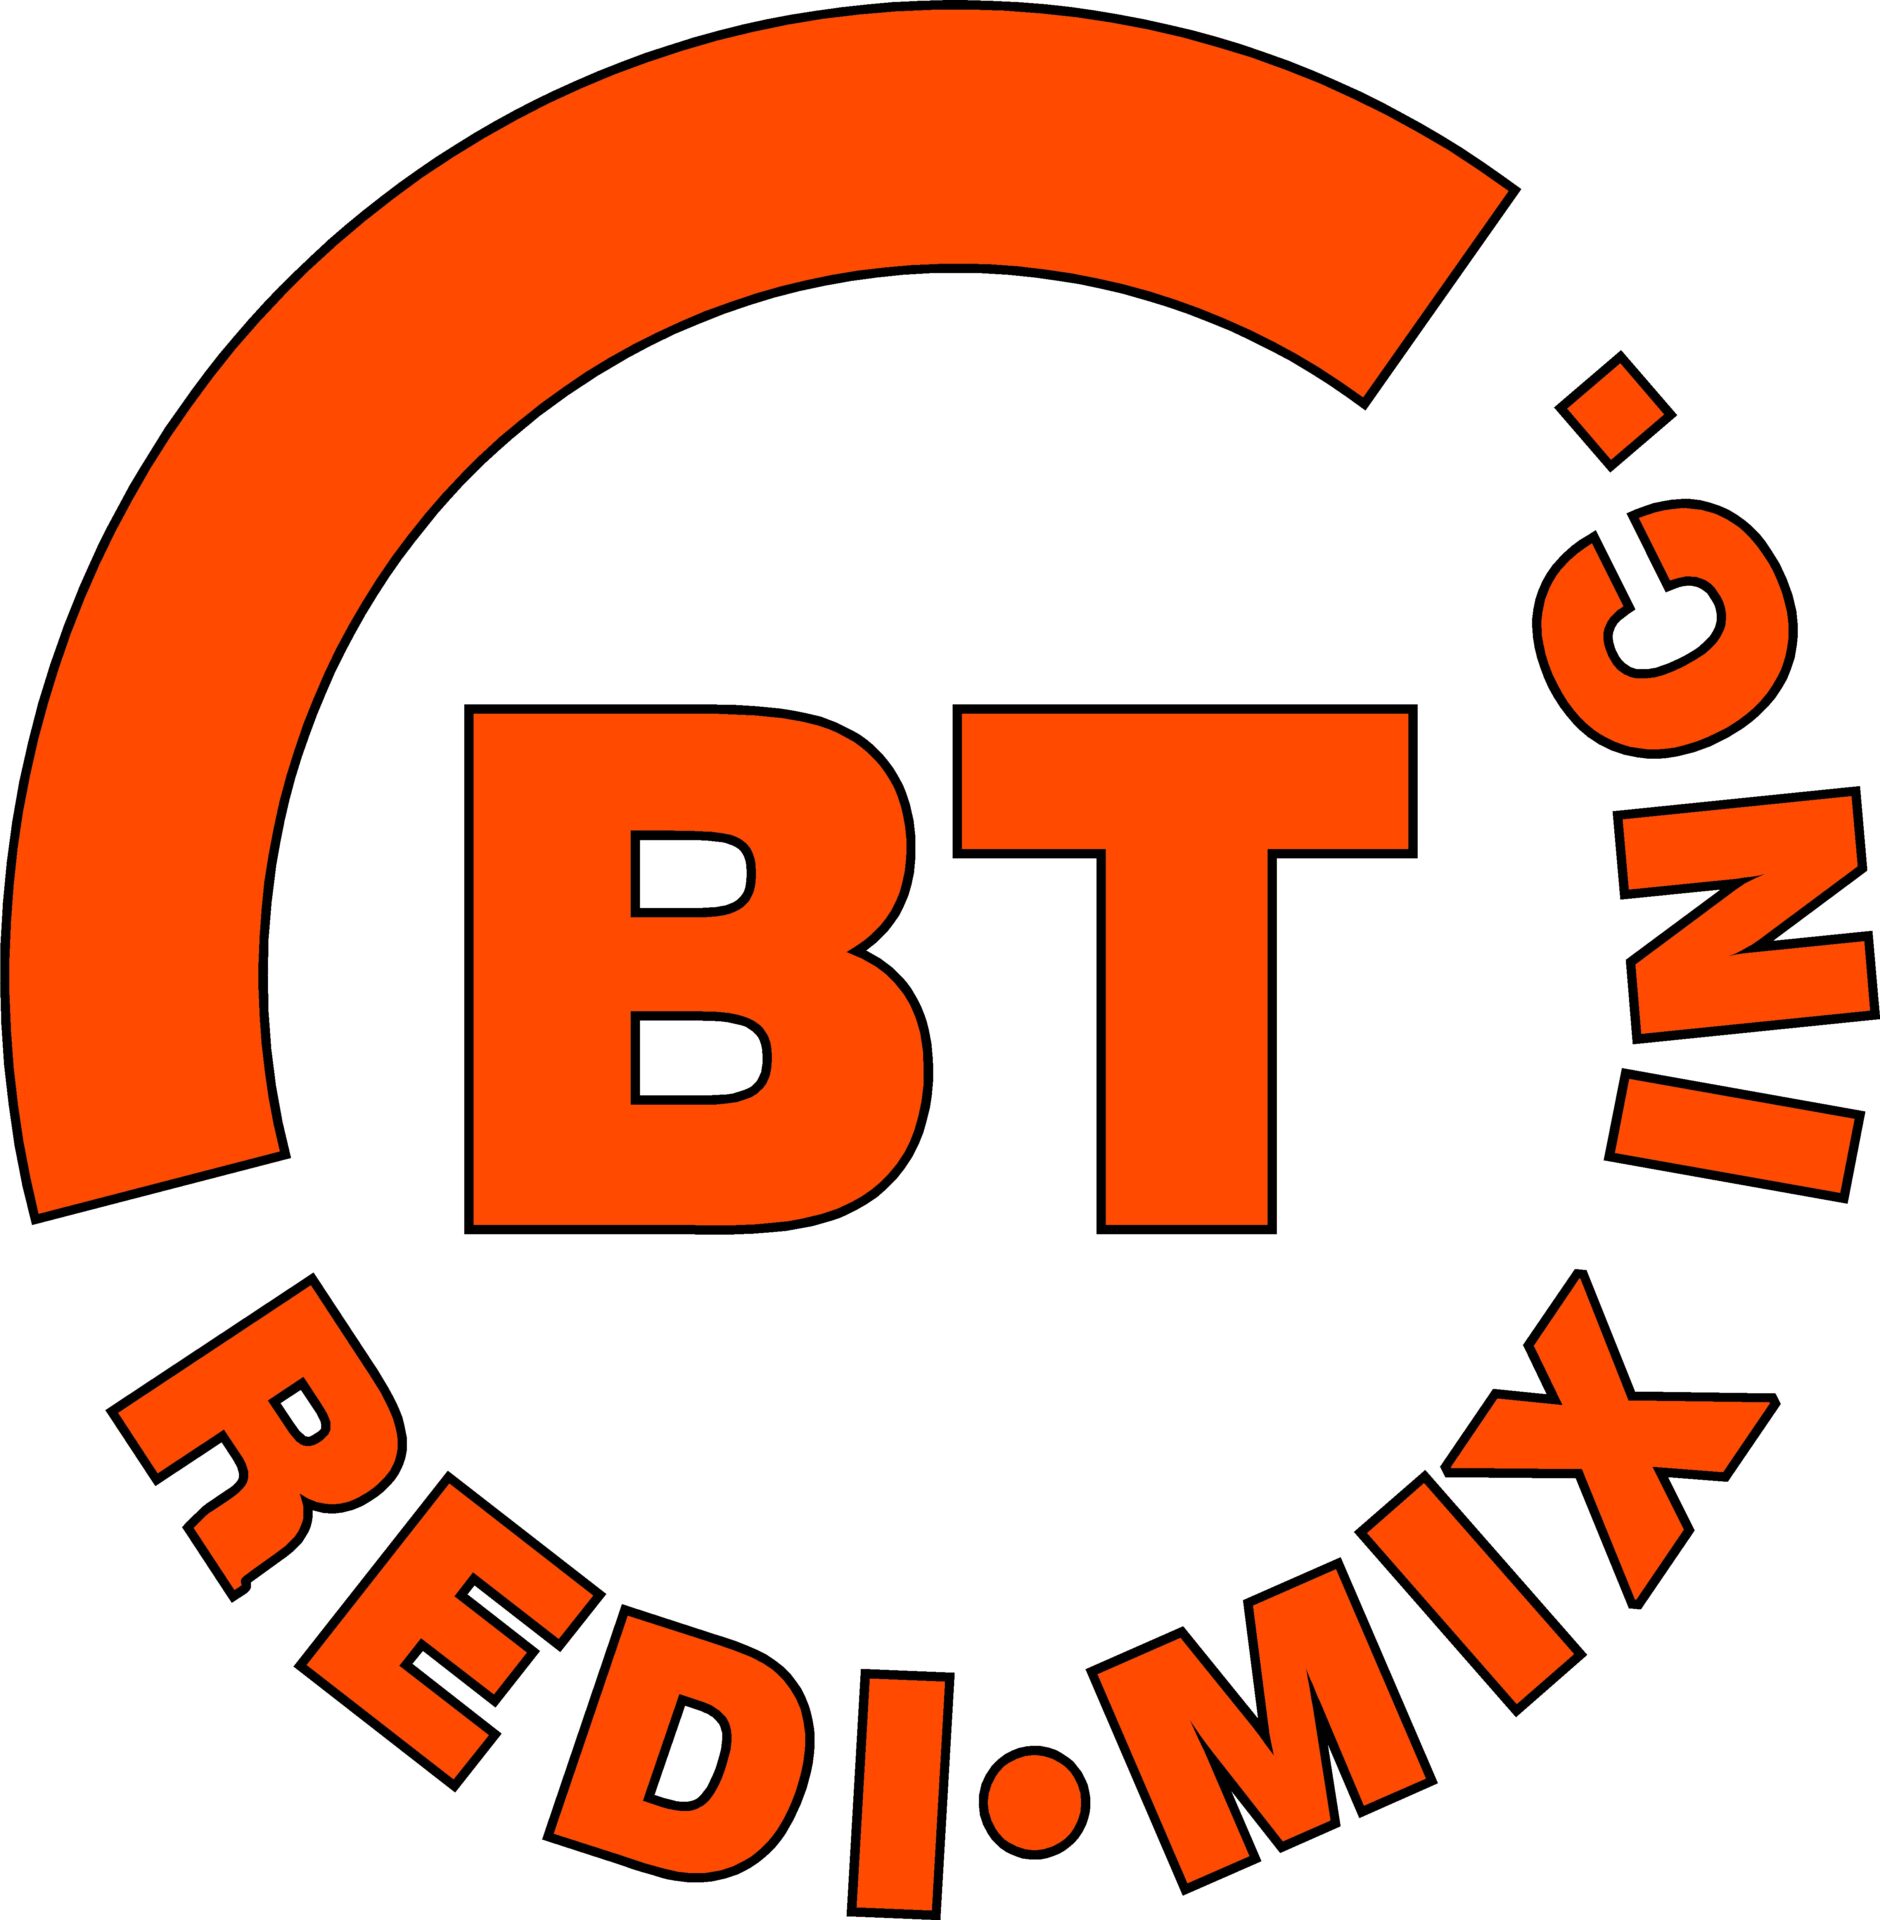 BT Redi Mix logo in a circle shape